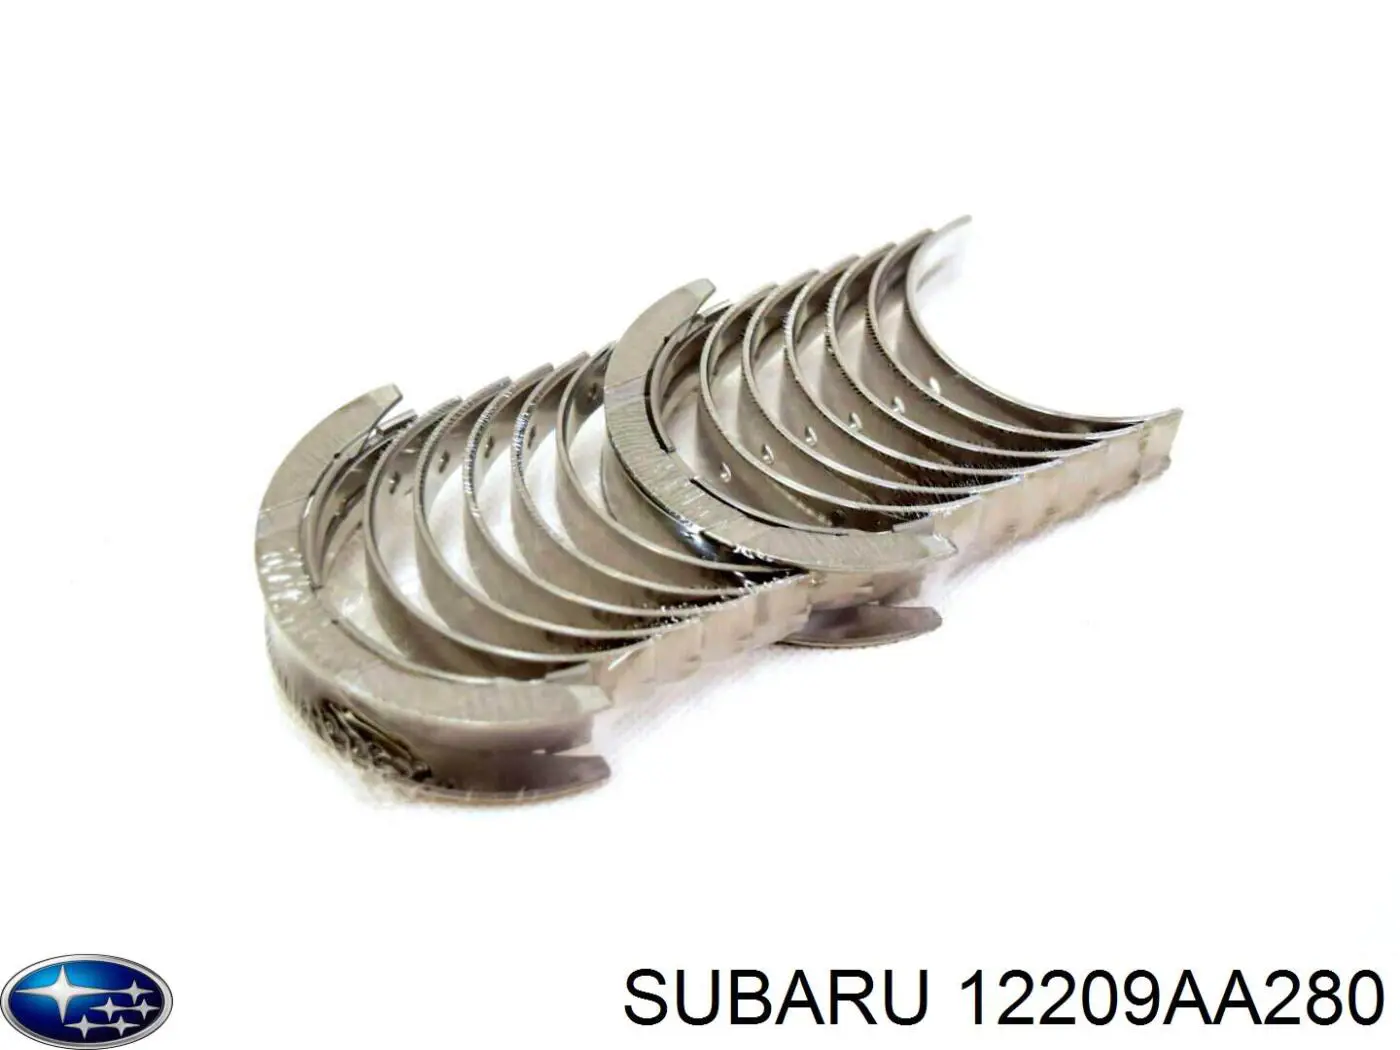 Вкладыши коленвала коренные, комплект, стандарт (STD) Subaru 12209AA280